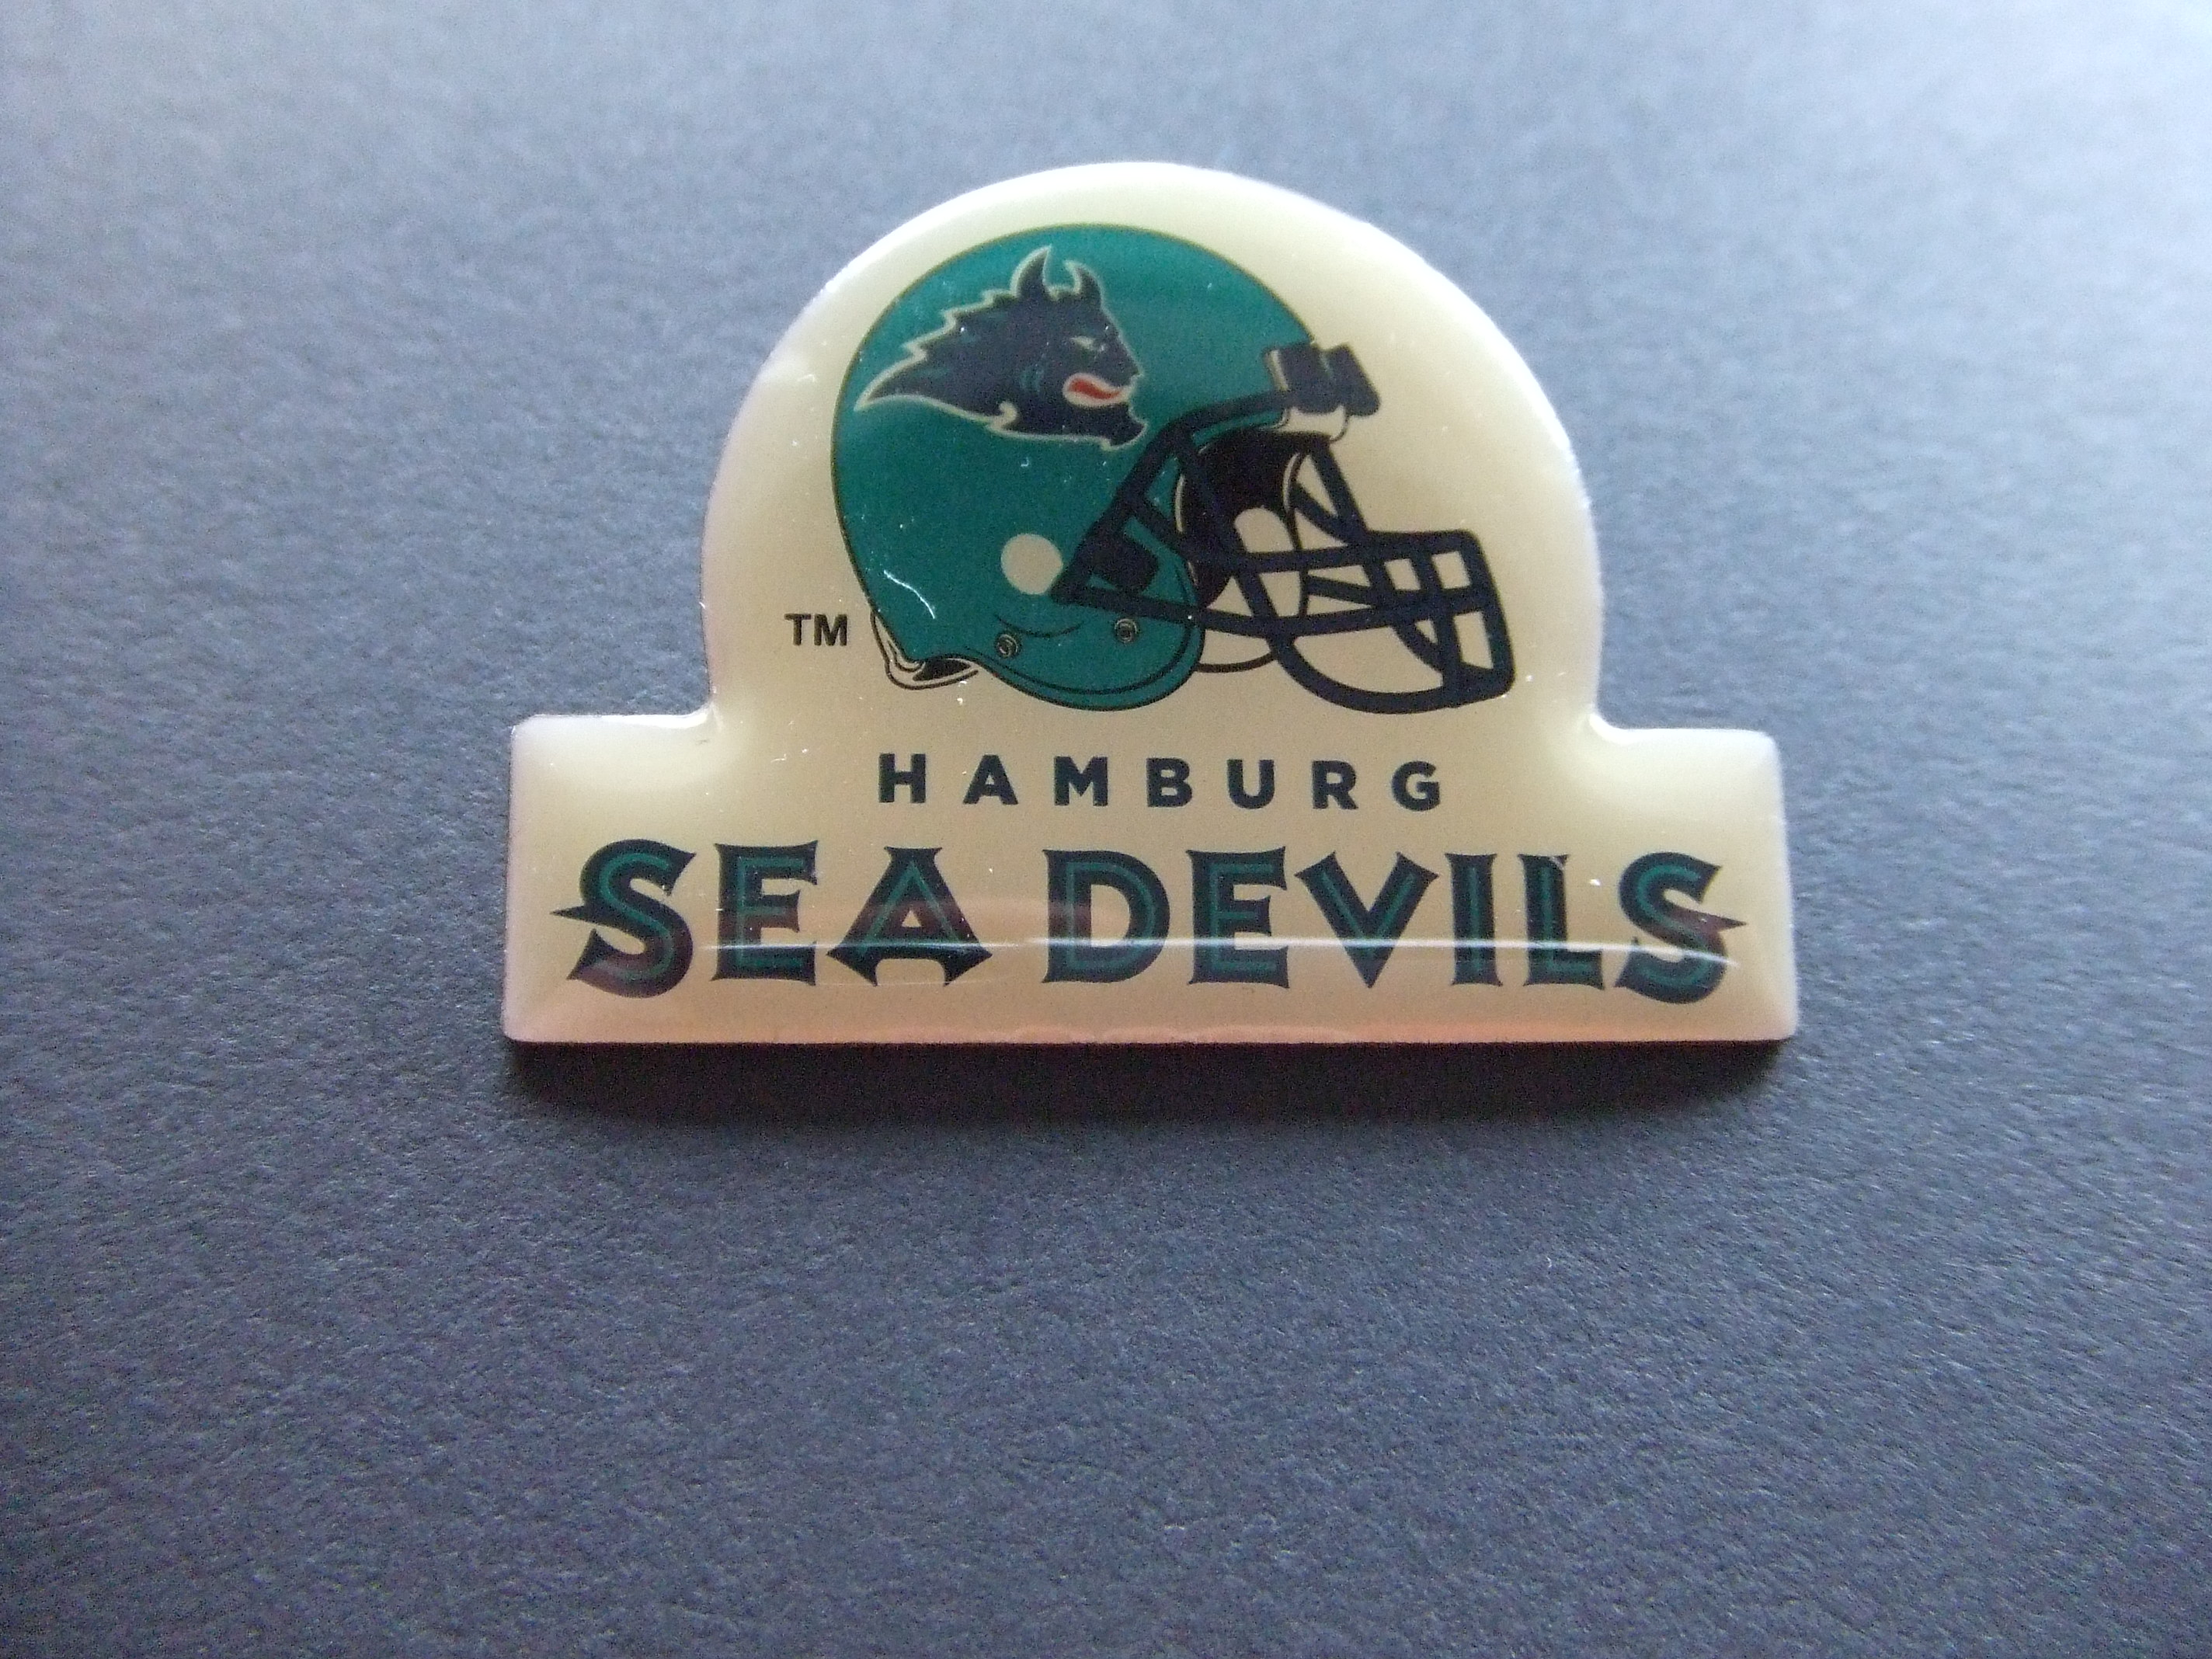 American football The Hamburg Sea Devils